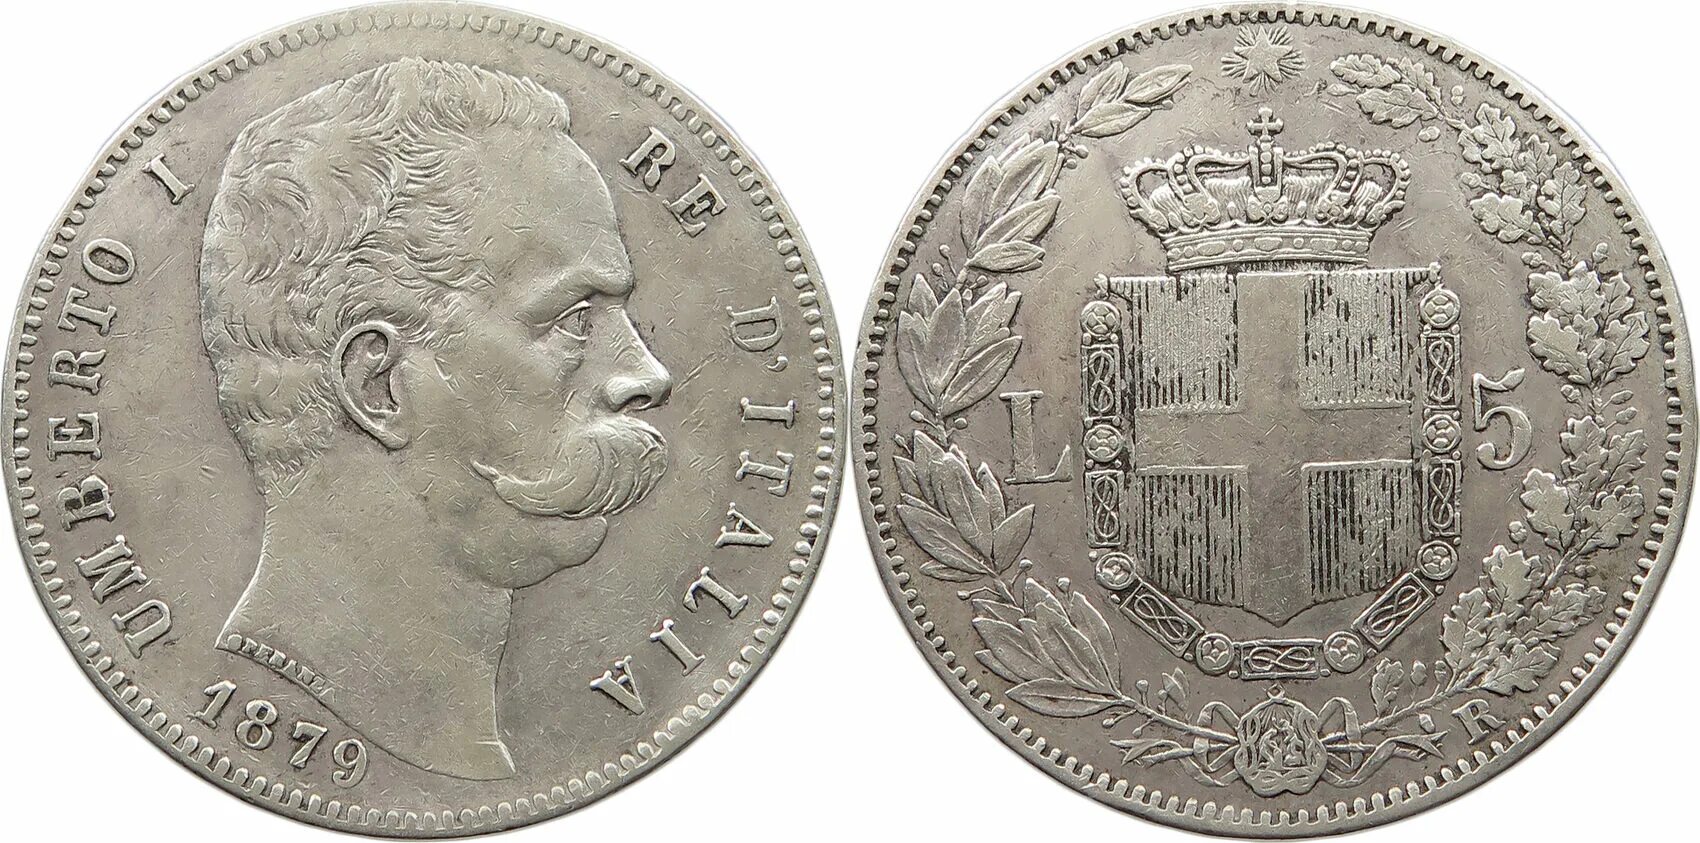 1879 лир. Австрия 1 Союзный талер 1868. Монета Рагуза 1646. Австрийская монета талер. Талер монета серебро.